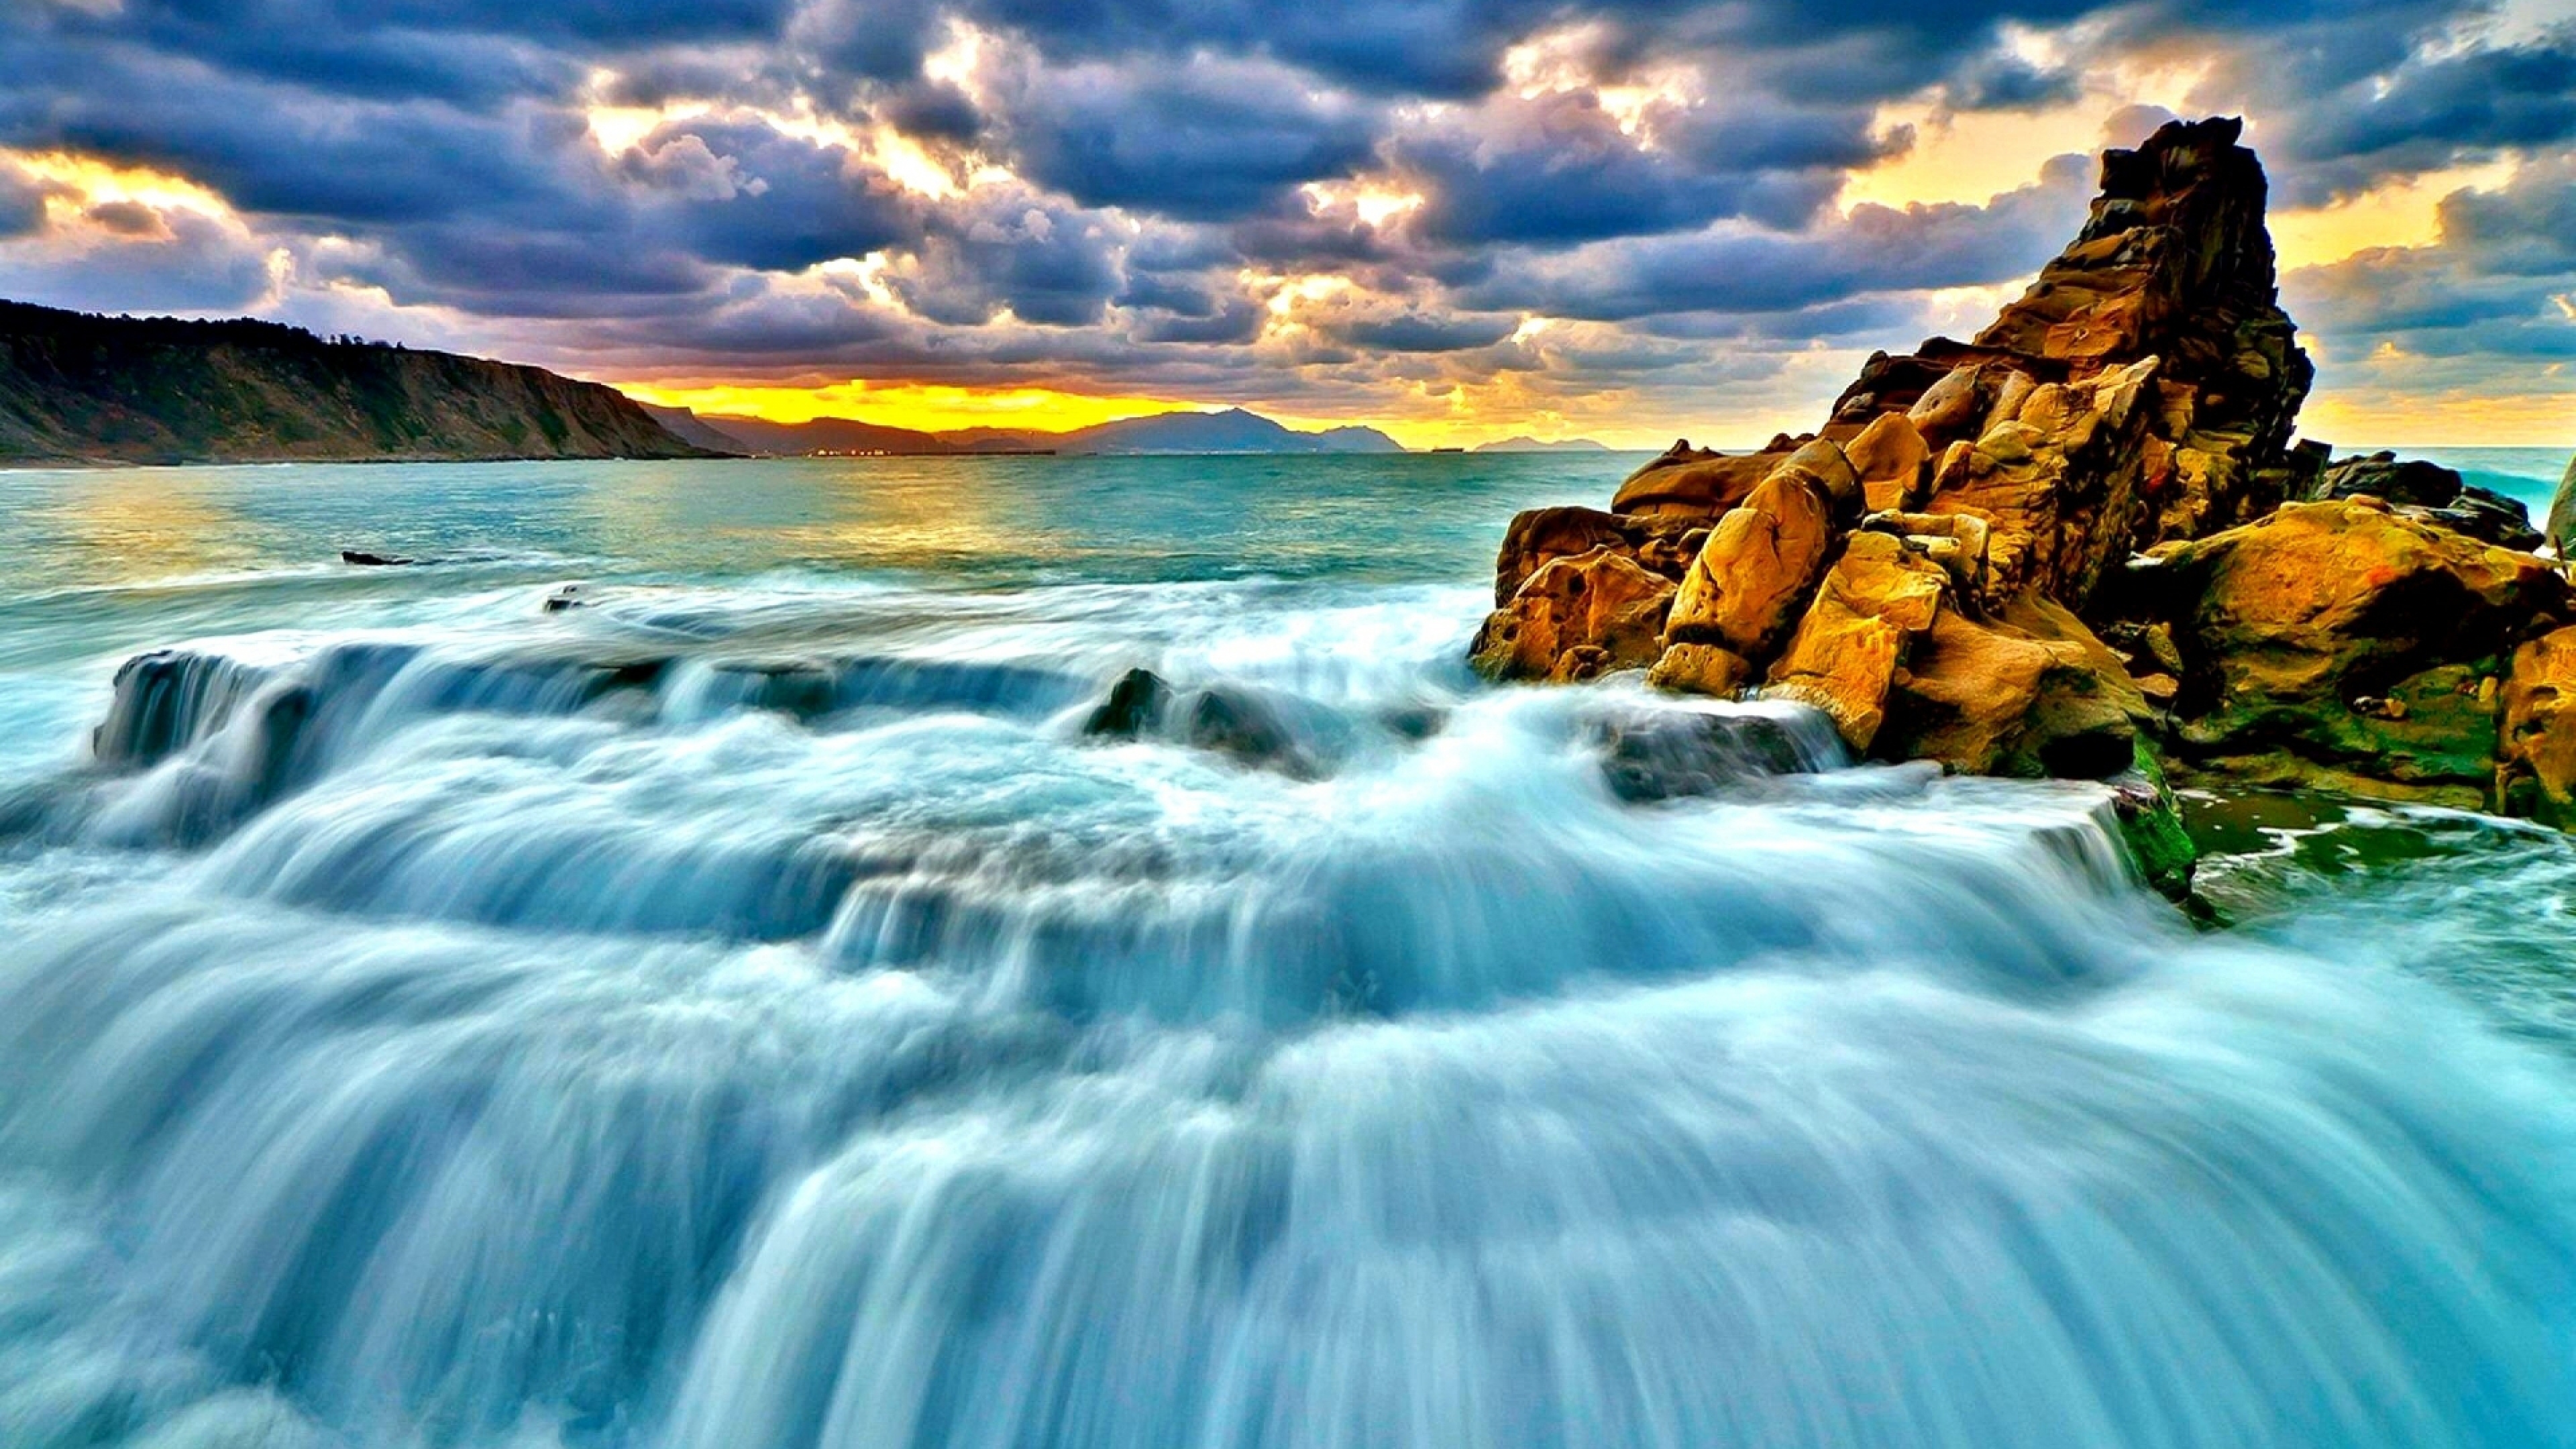 Wallpaper Sea Surf Sunset Waterfall Natura Images Good Morning Hd 140 Hd Wallpaper Backgrounds Download